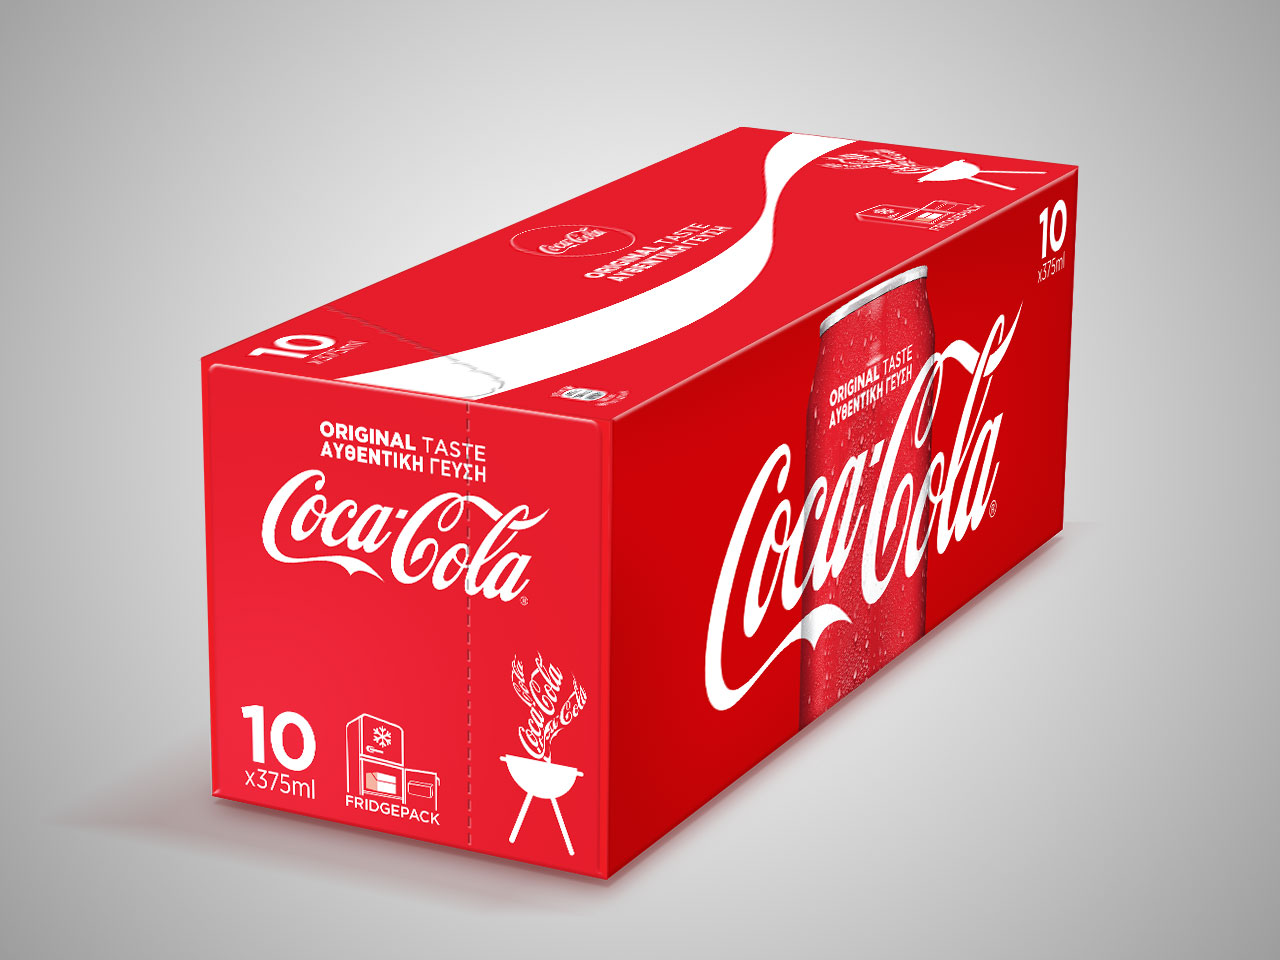 Packshot of the Coca-Cola Original fridgepack.